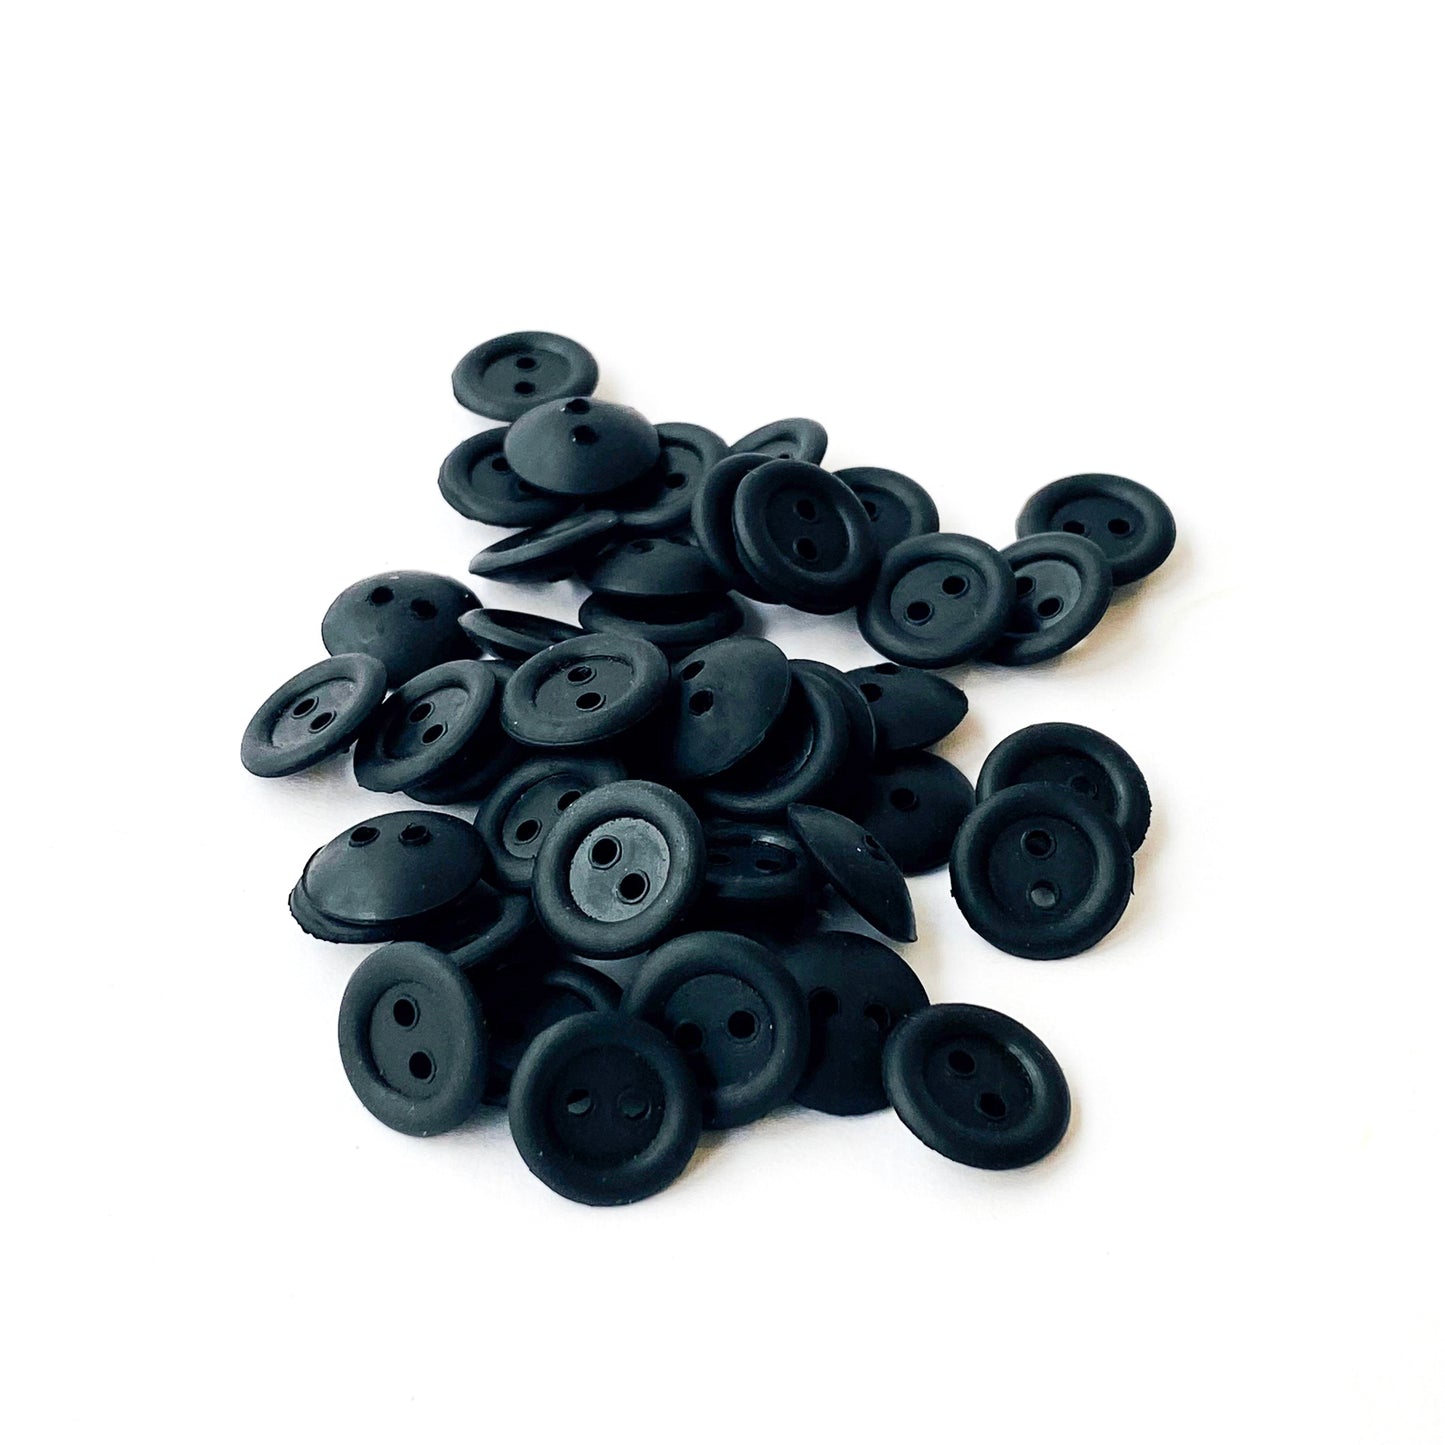 13mm Black Rubber Button